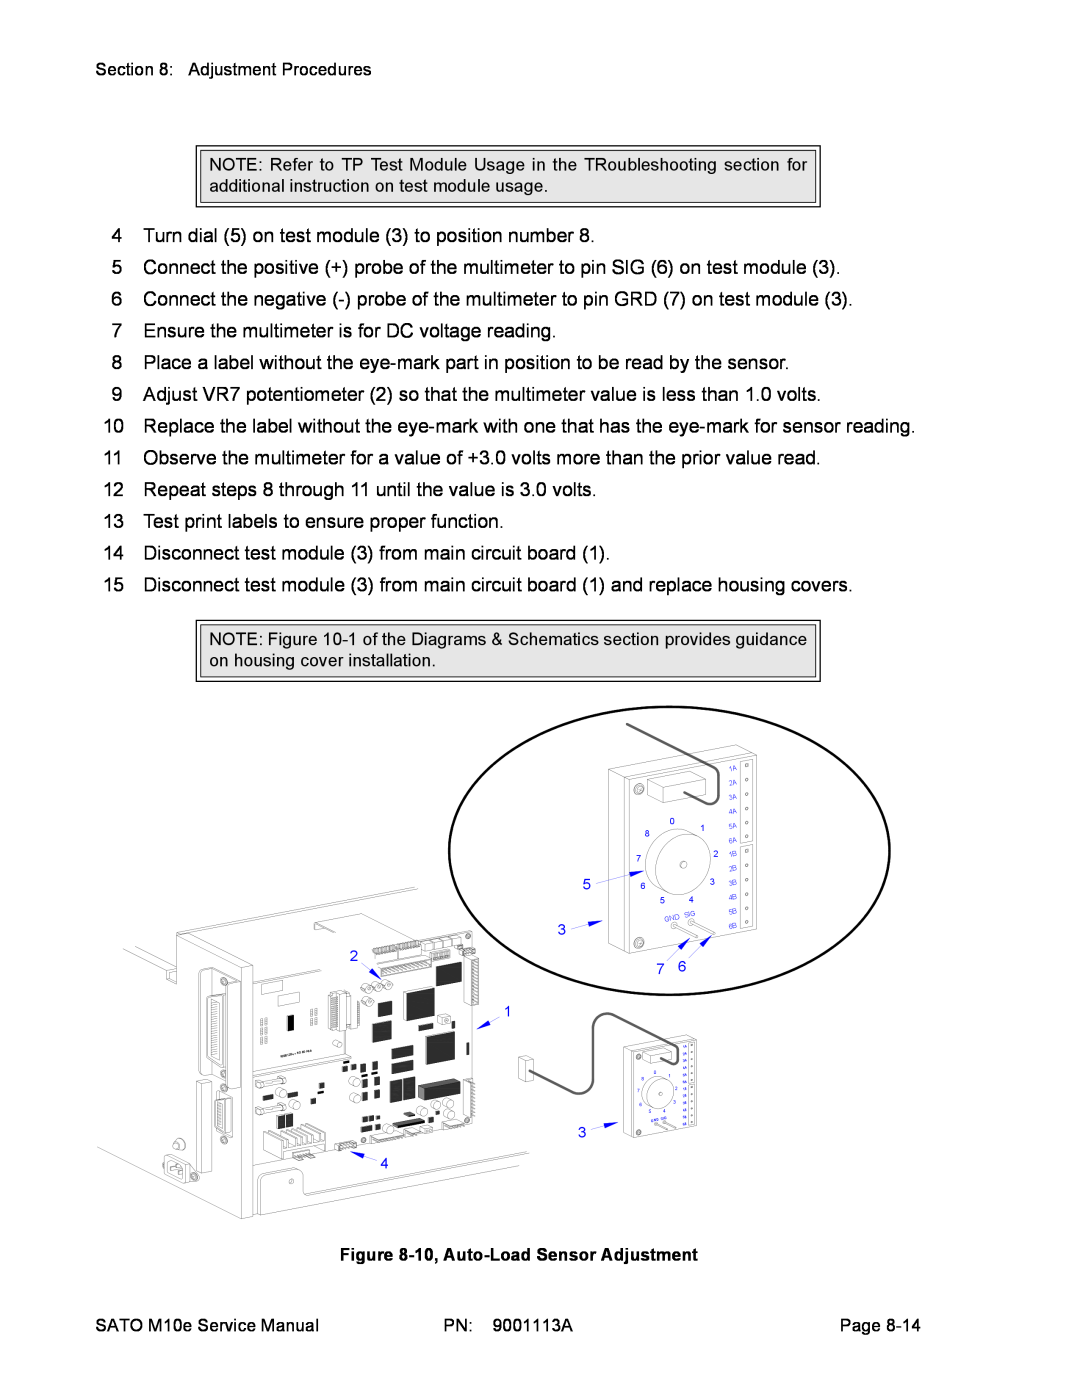 SATO 10e service manual 10, Auto-Load Sensor Adjustment, IEEE1284 +RSBOARD 